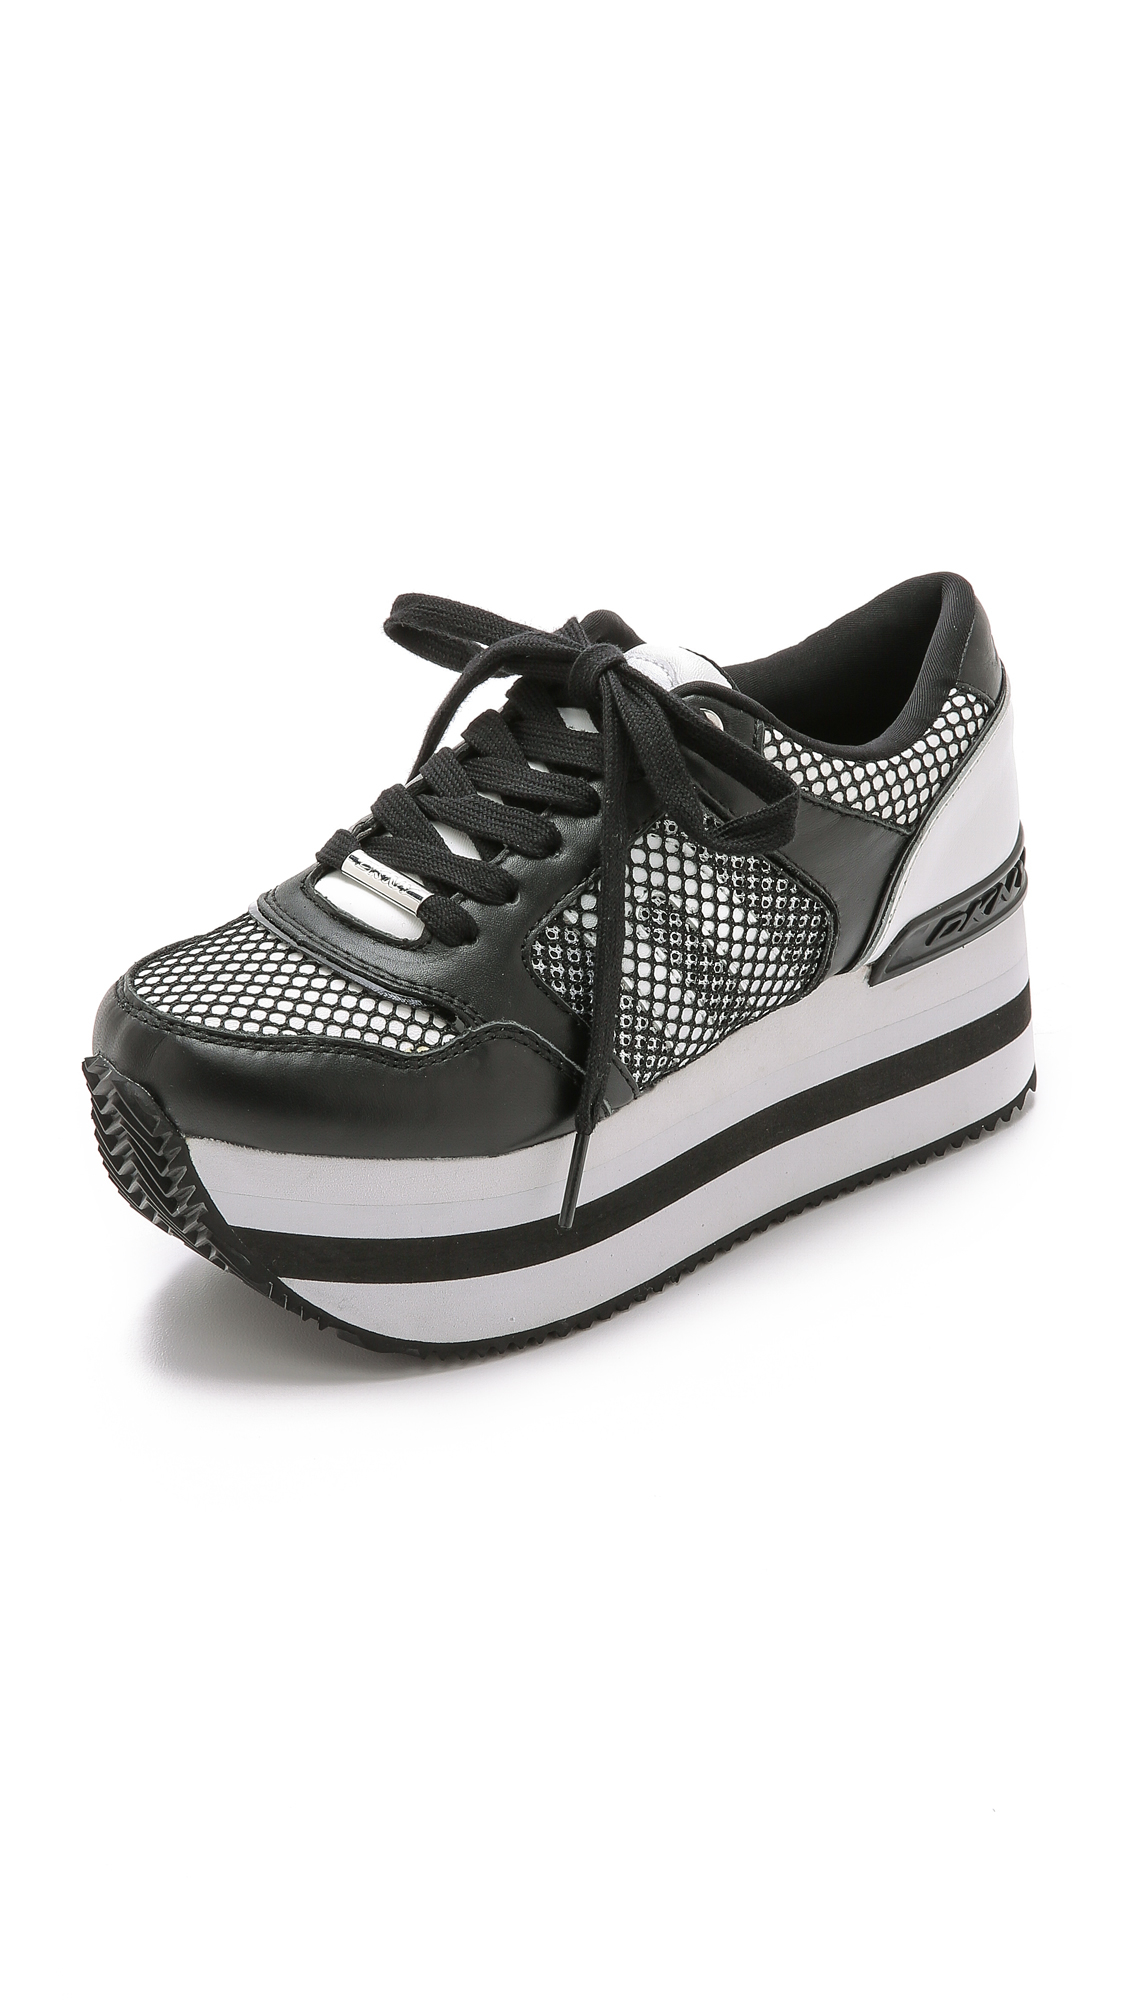 DKNY Jill Platform Sneakers - White/black - Lyst